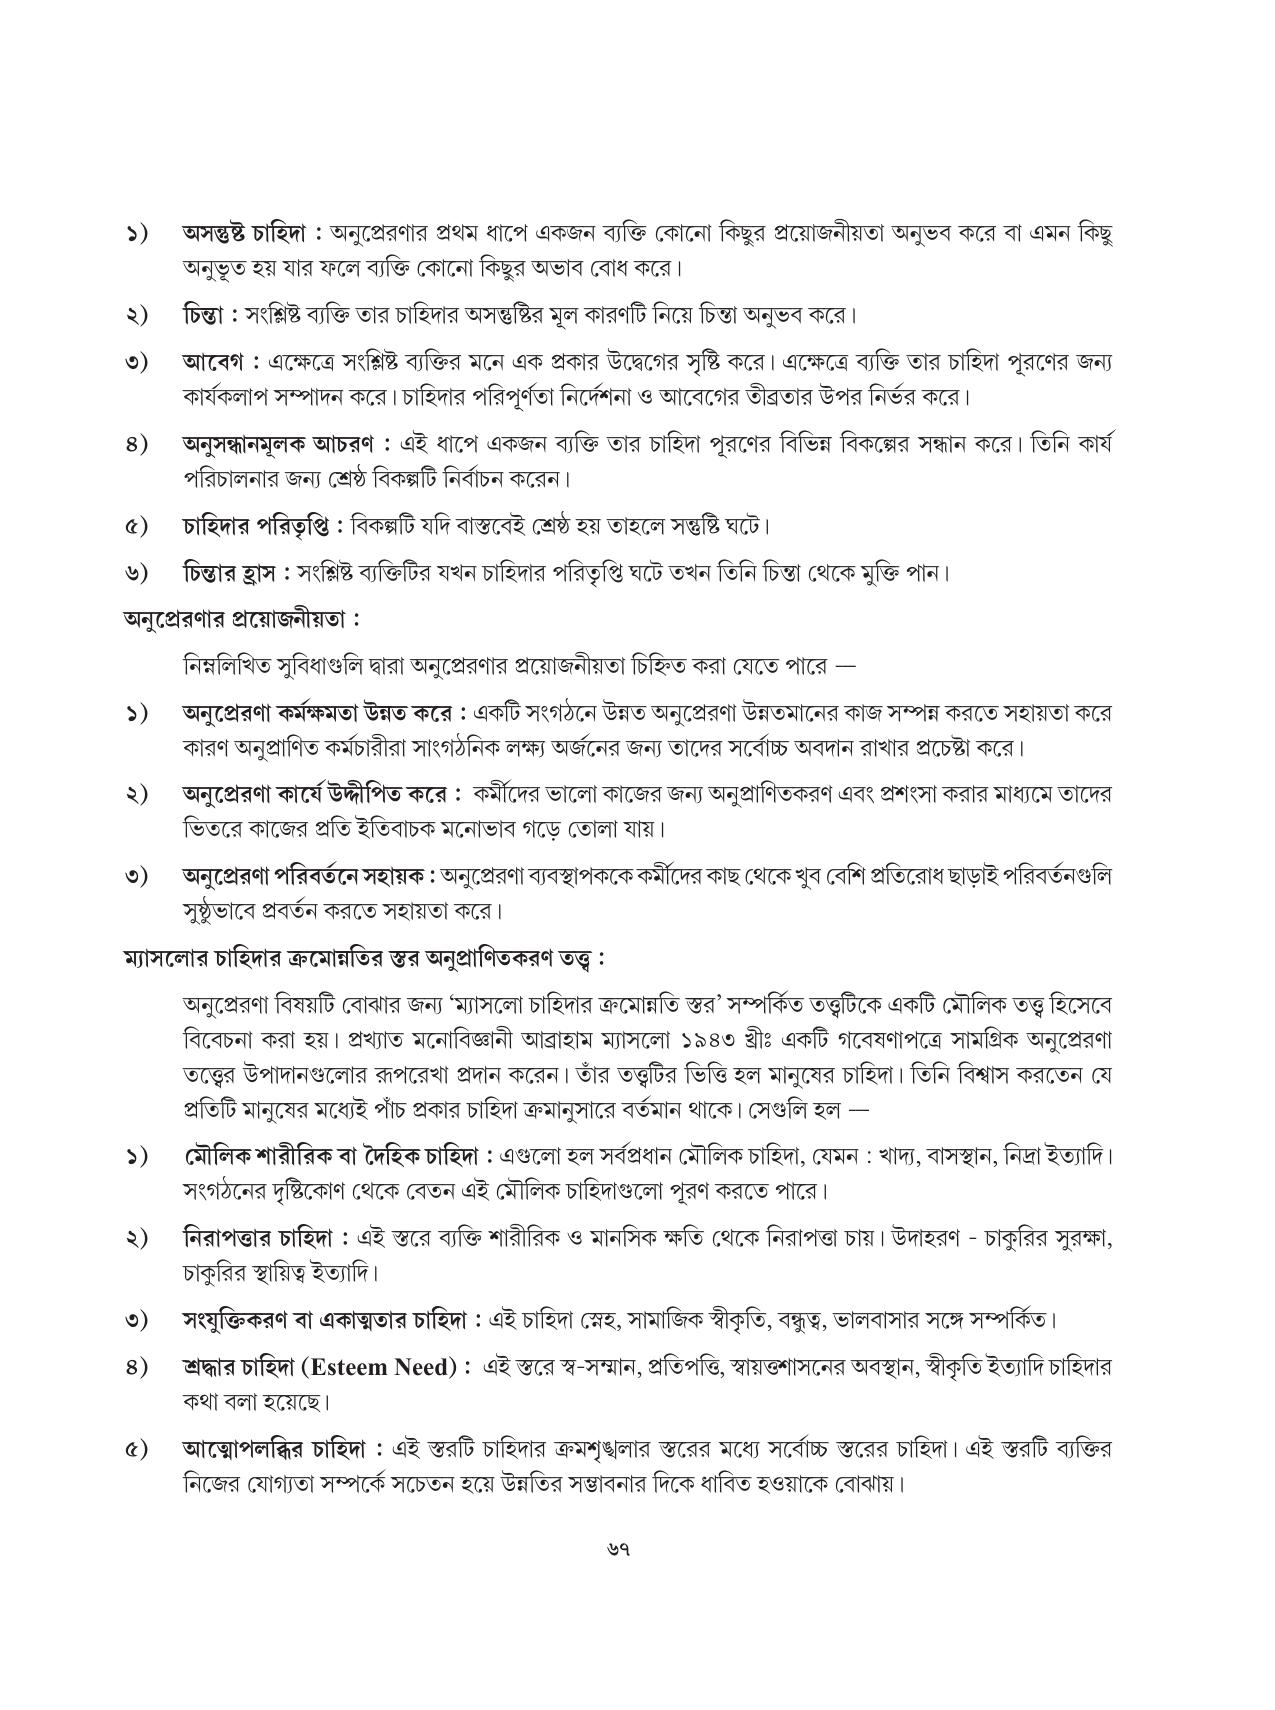 Tripura Board Class 12 Karbari Shastra Bengali Version Workbooks - Page 67